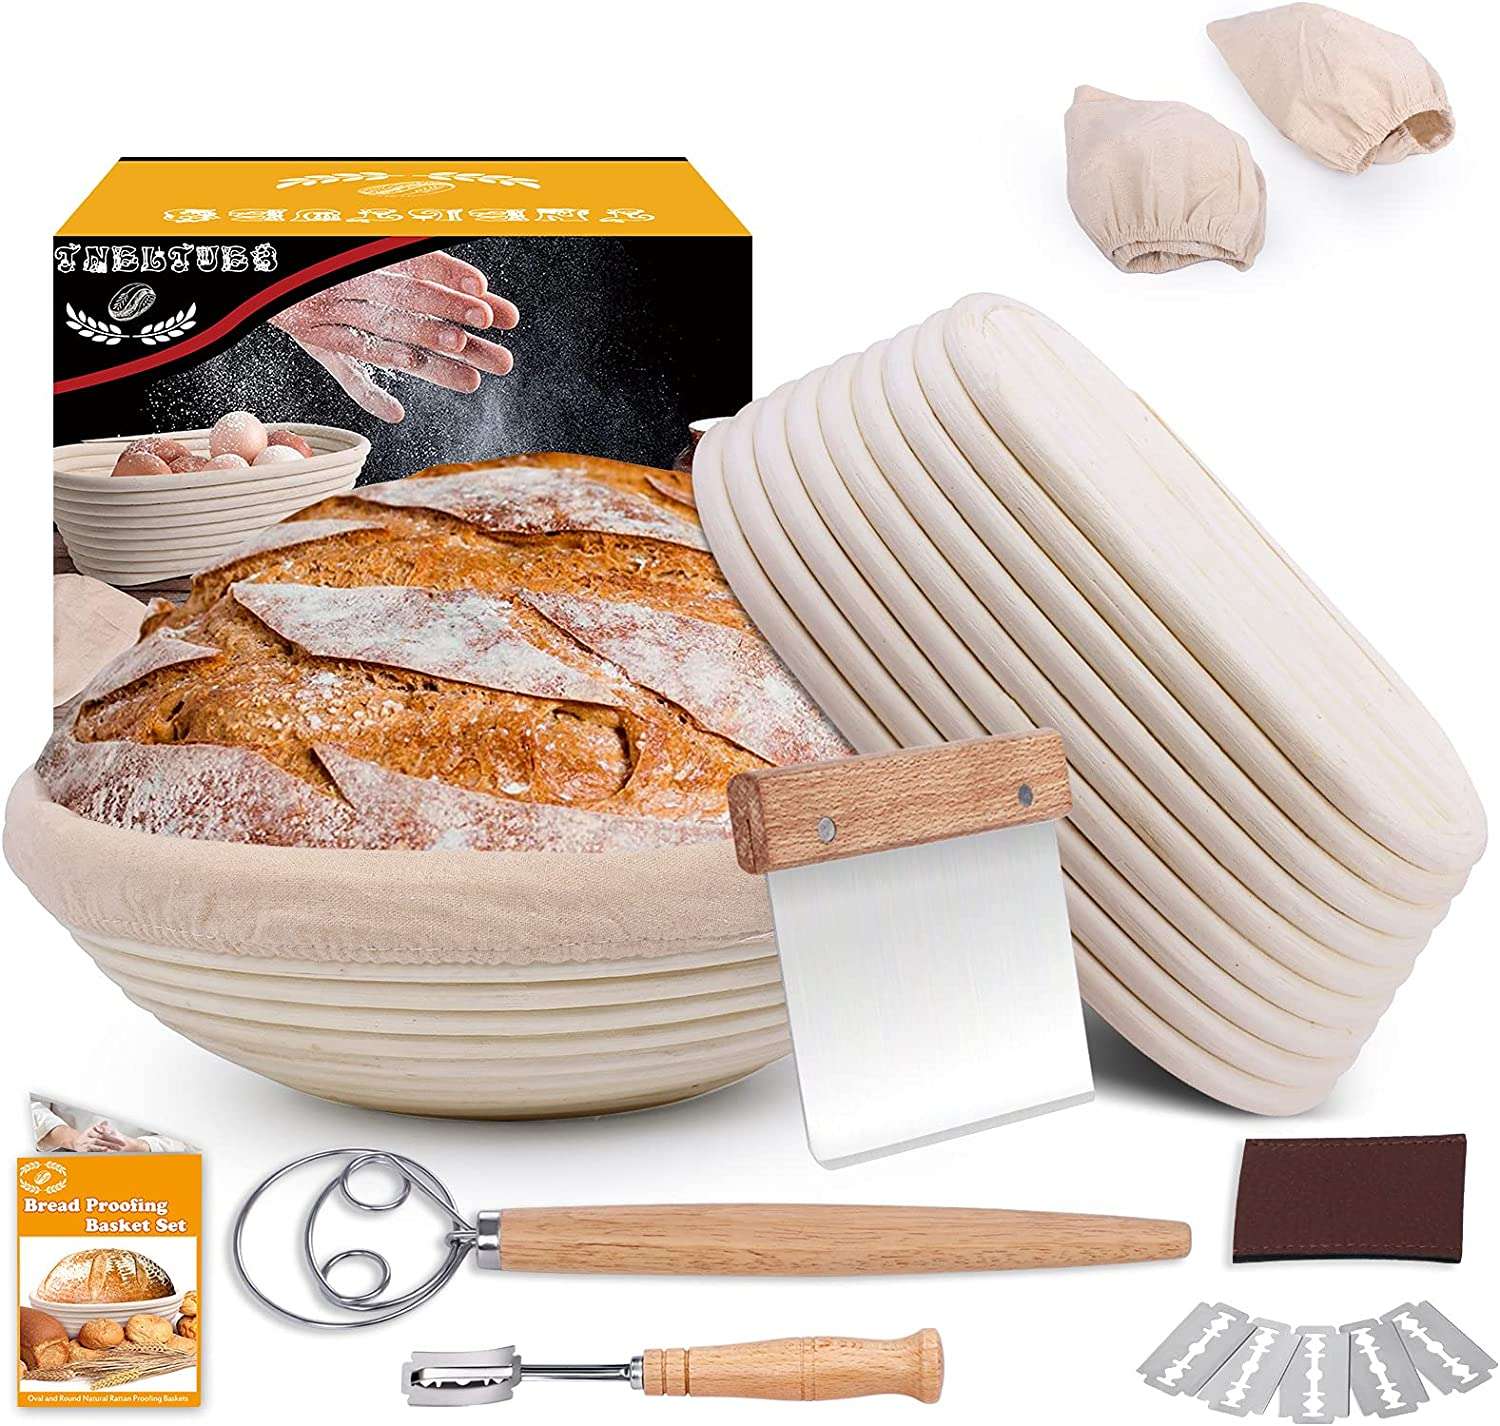 6. TNELTEUB Bread Proofing Basket